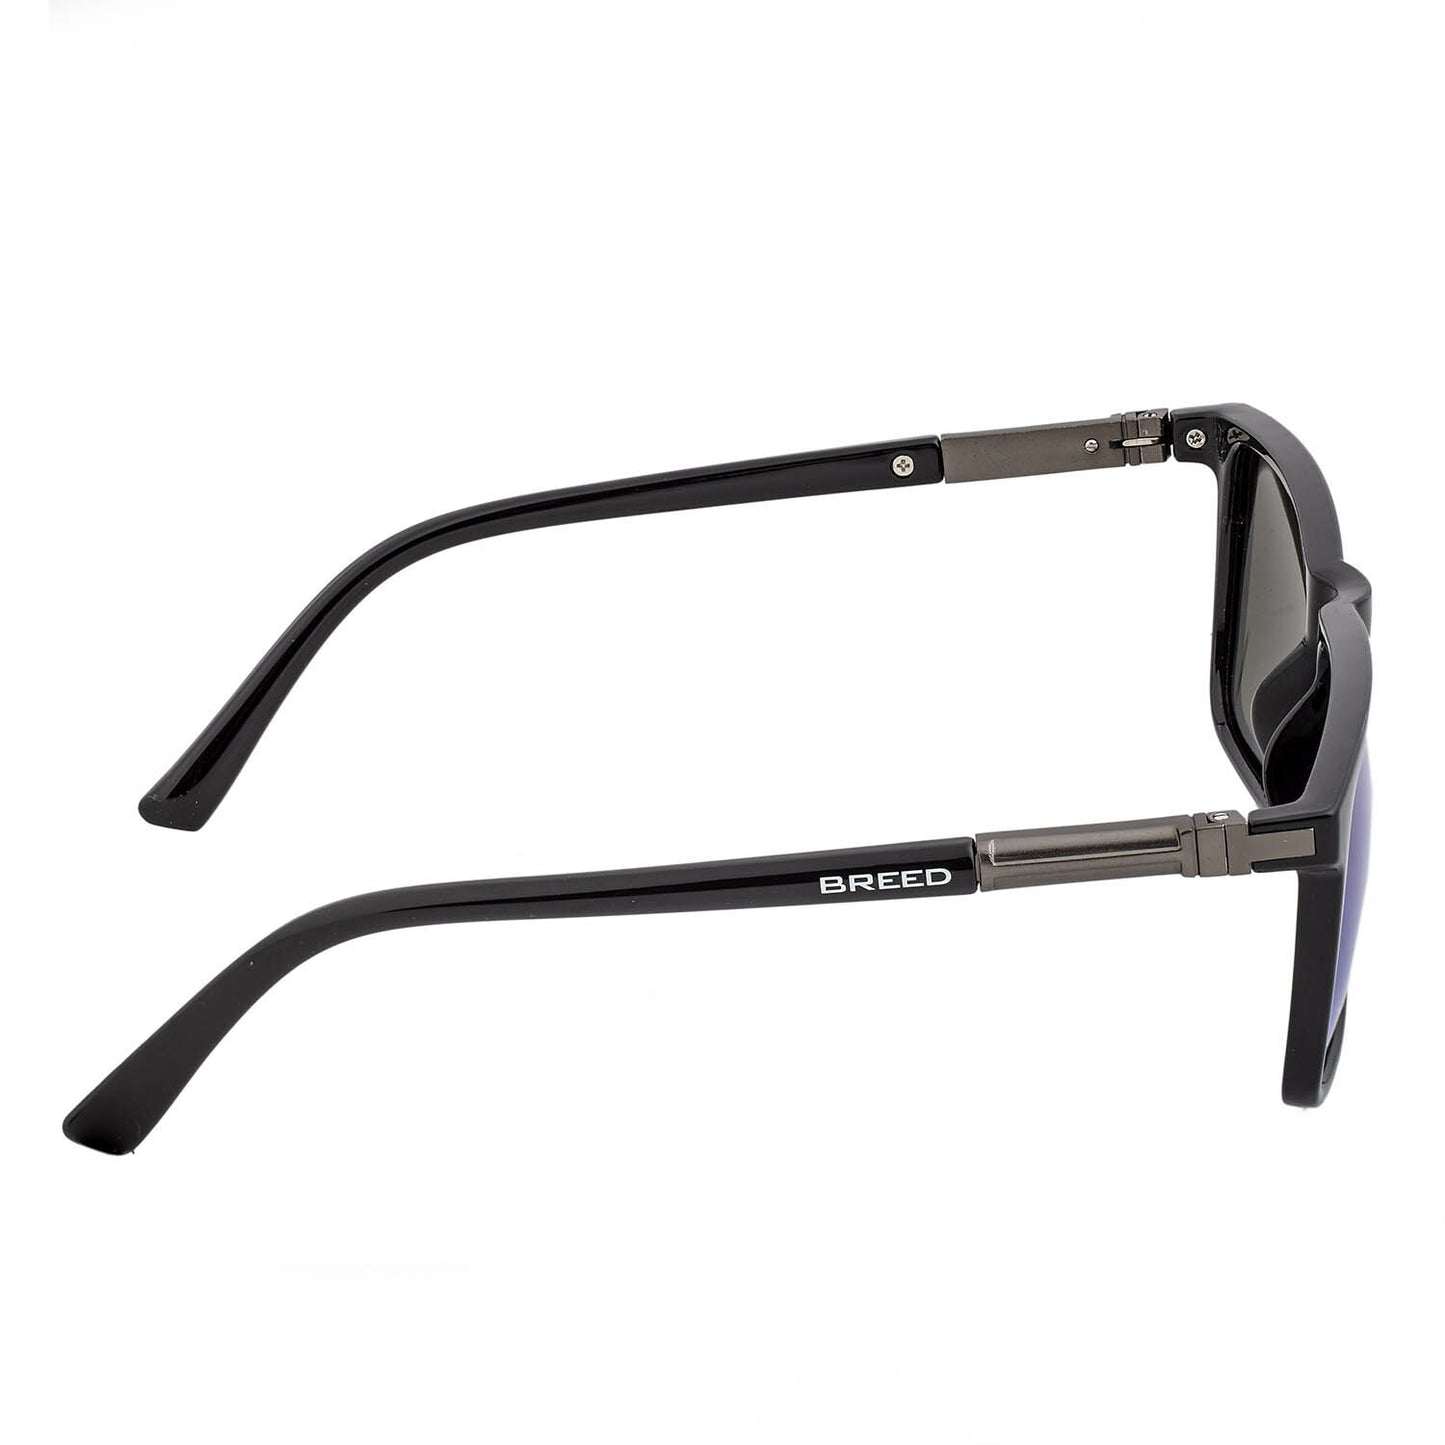 Caelum Polarized Sunglasses - Black + Blue